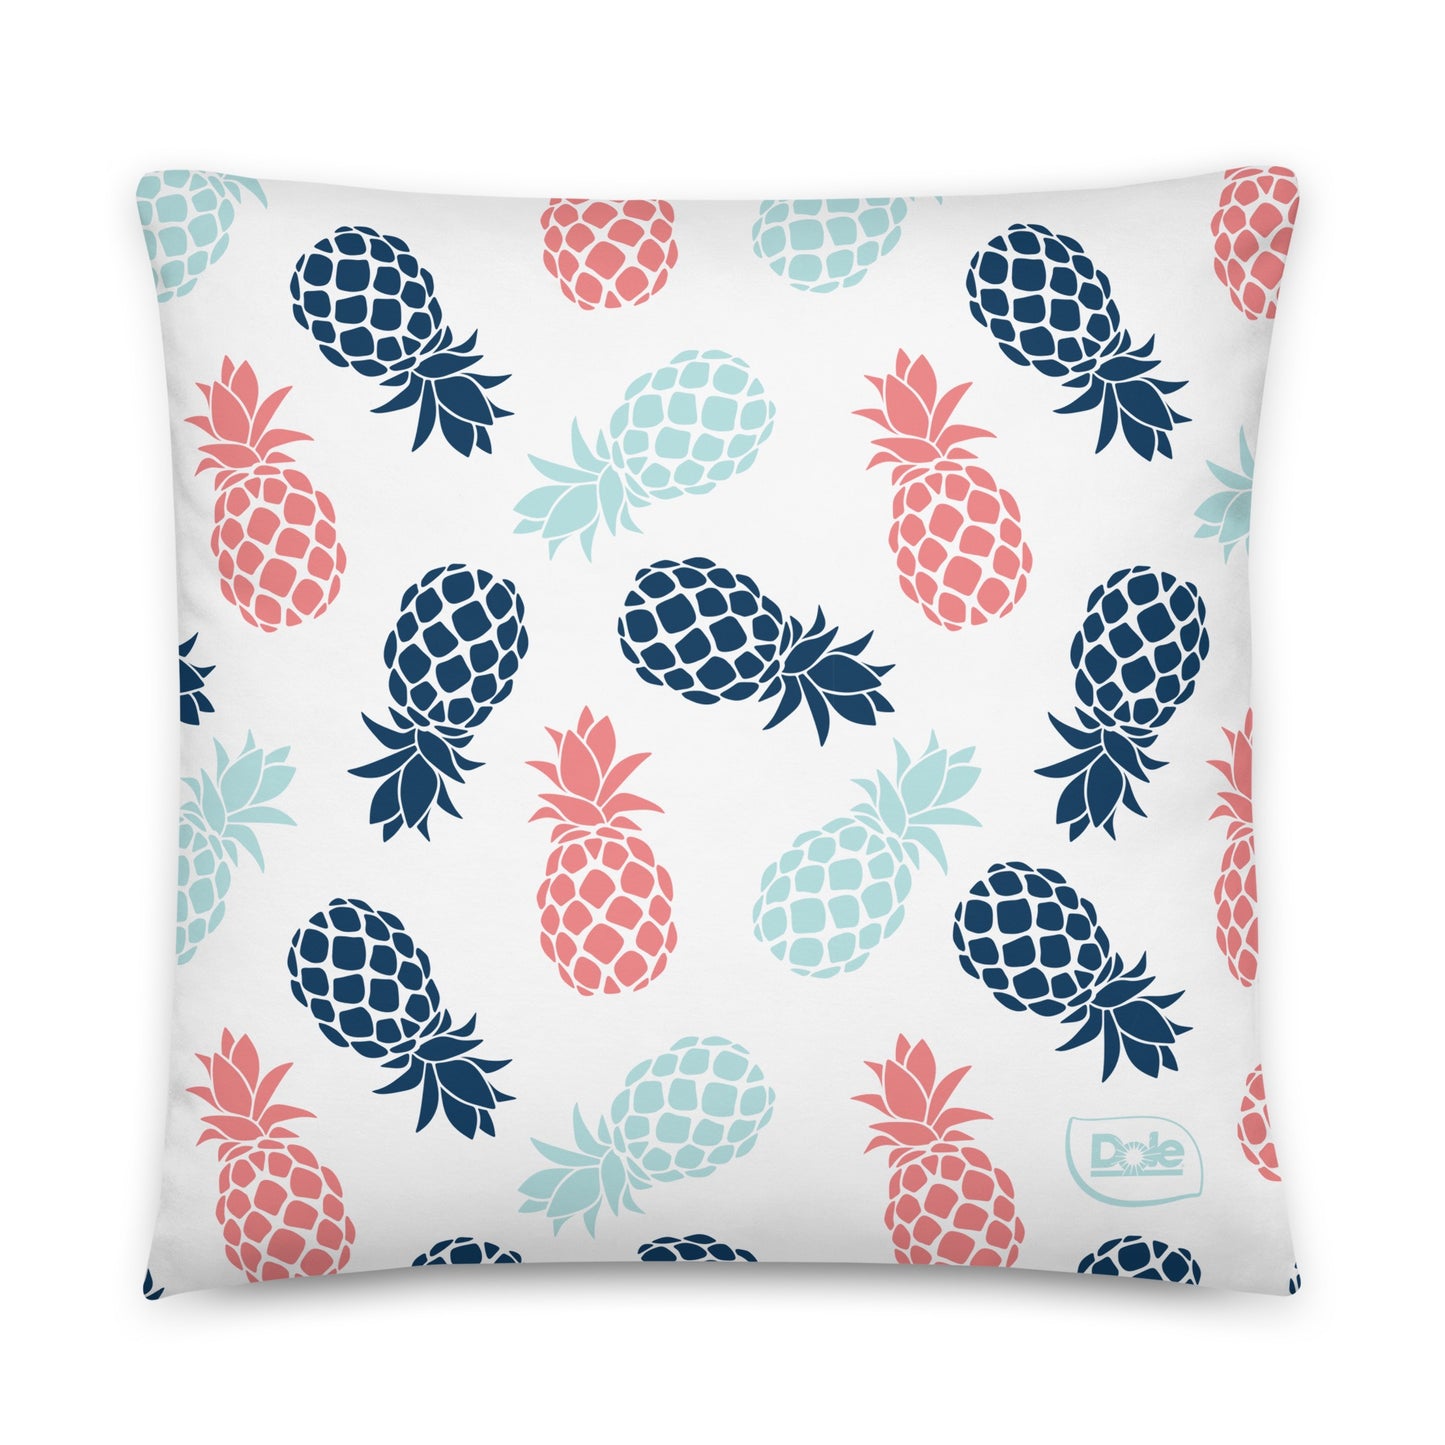 Dole Pineapple Throw Pillow